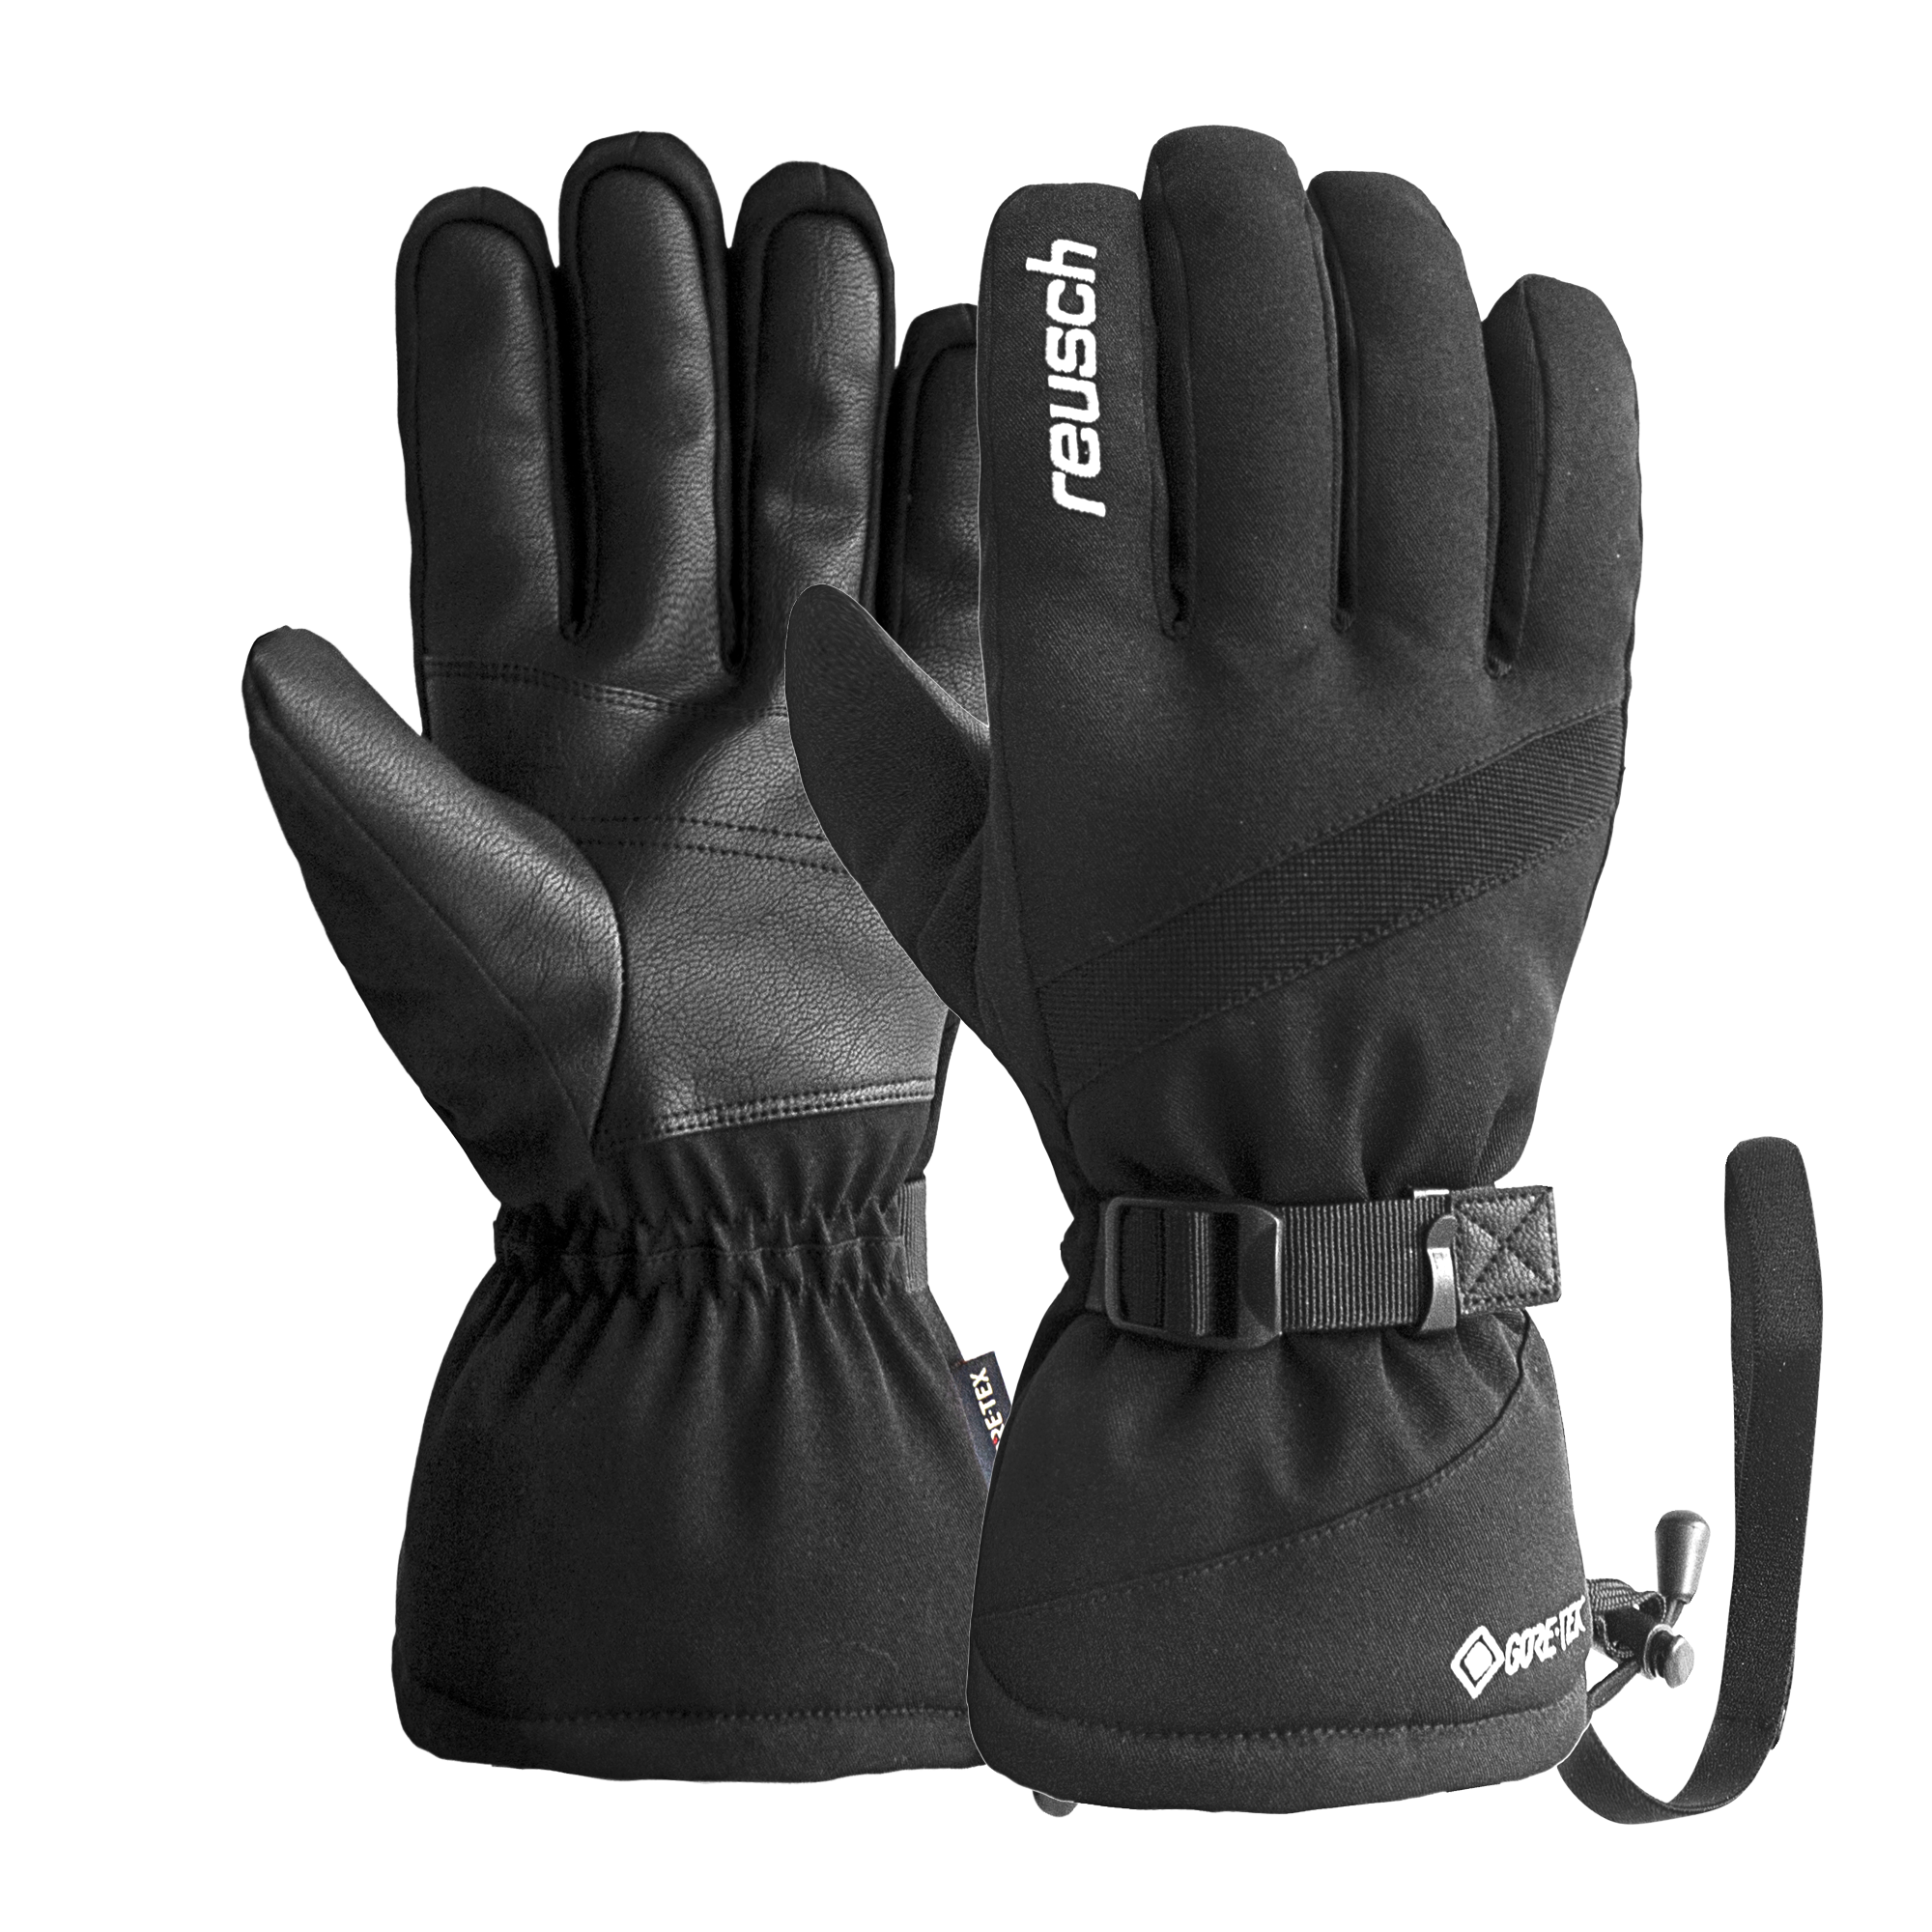 Reusch Winter Glove Warm GORE-TEX